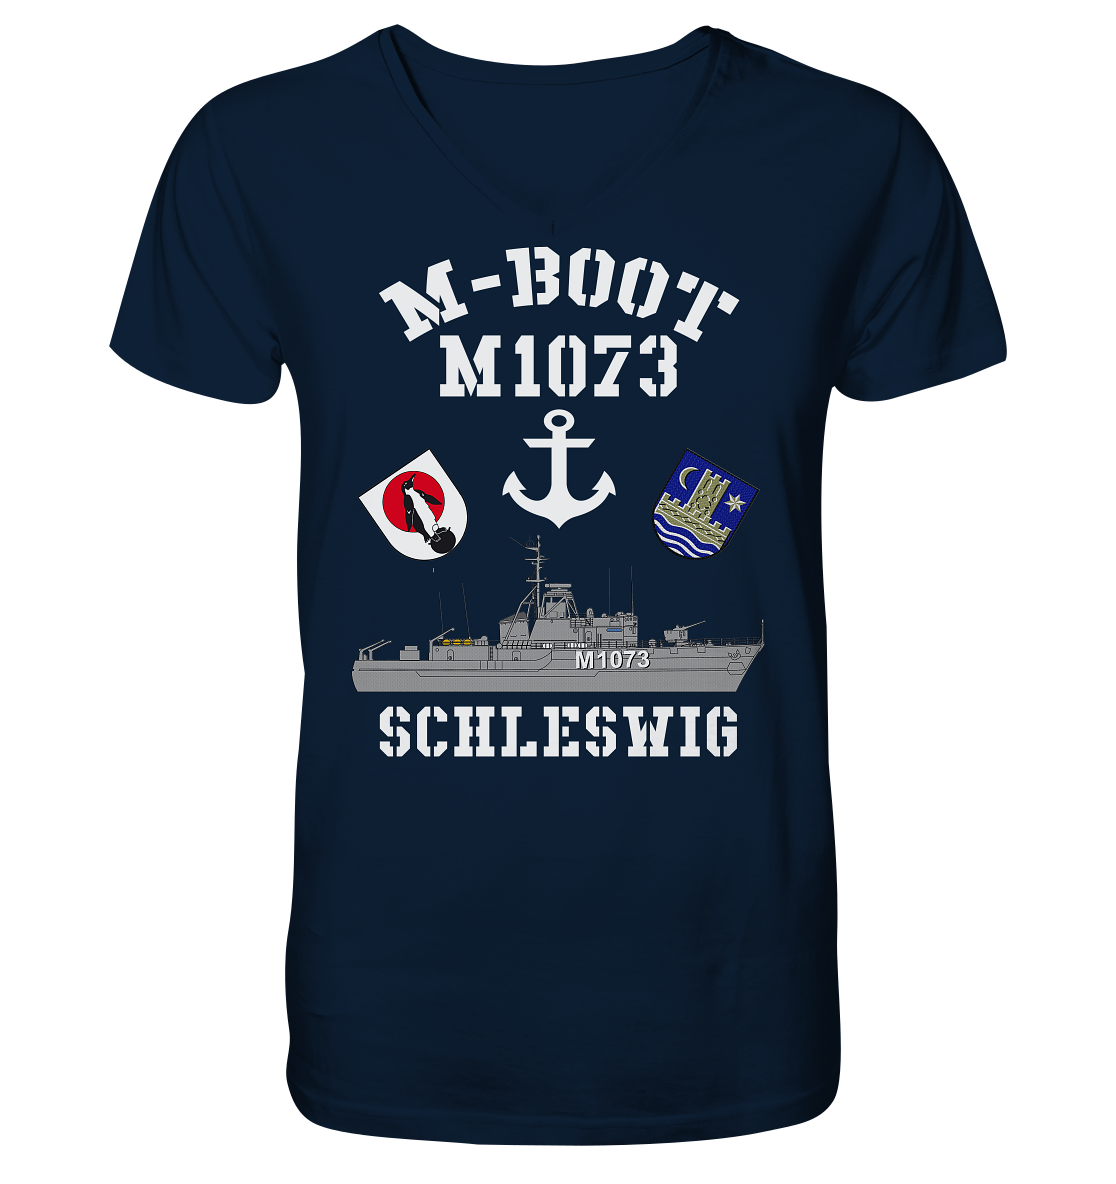 M-Boot M1073 SCHLESWIG Anker (HL) - Mens Organic V-Neck Shirt